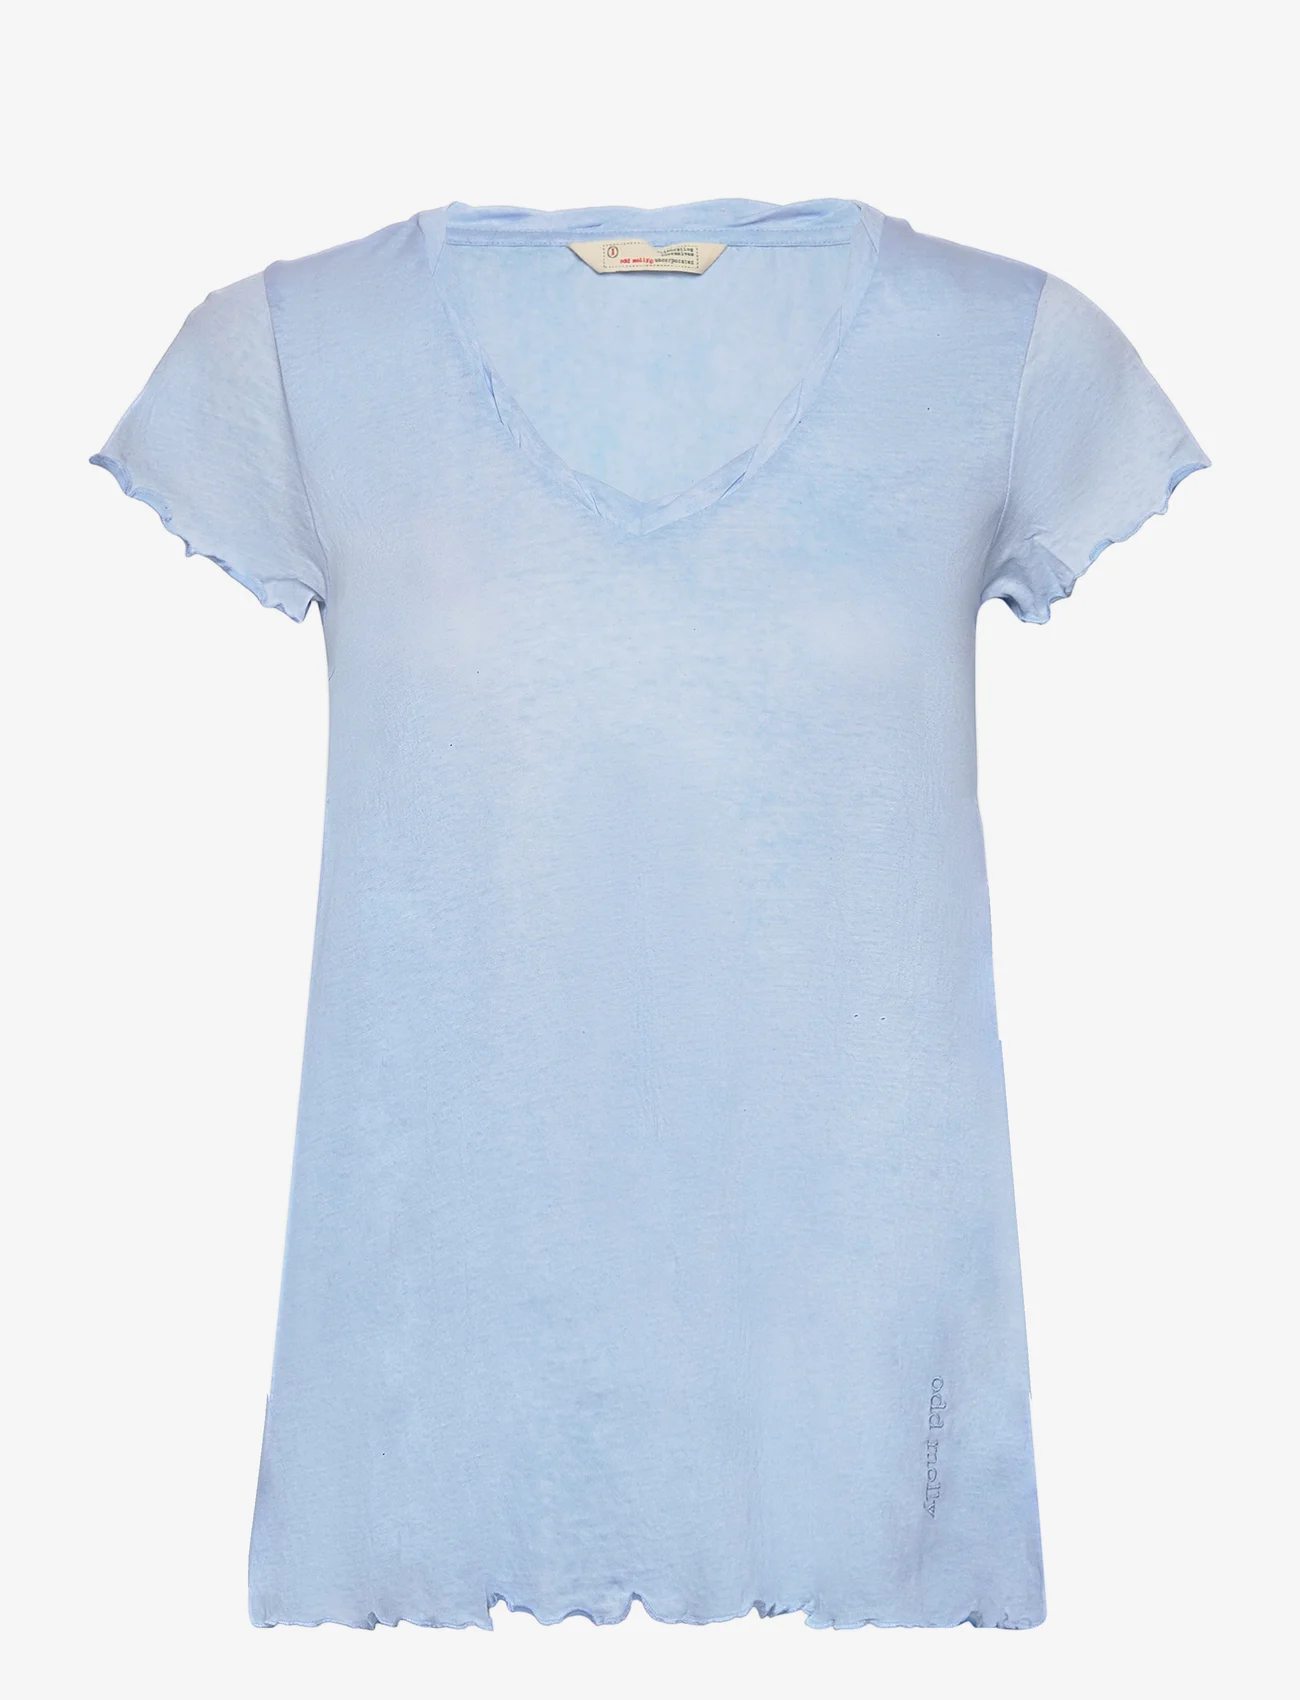 ODD MOLLY - Carole Top - t-shirty & zopy - blue cloud - 0